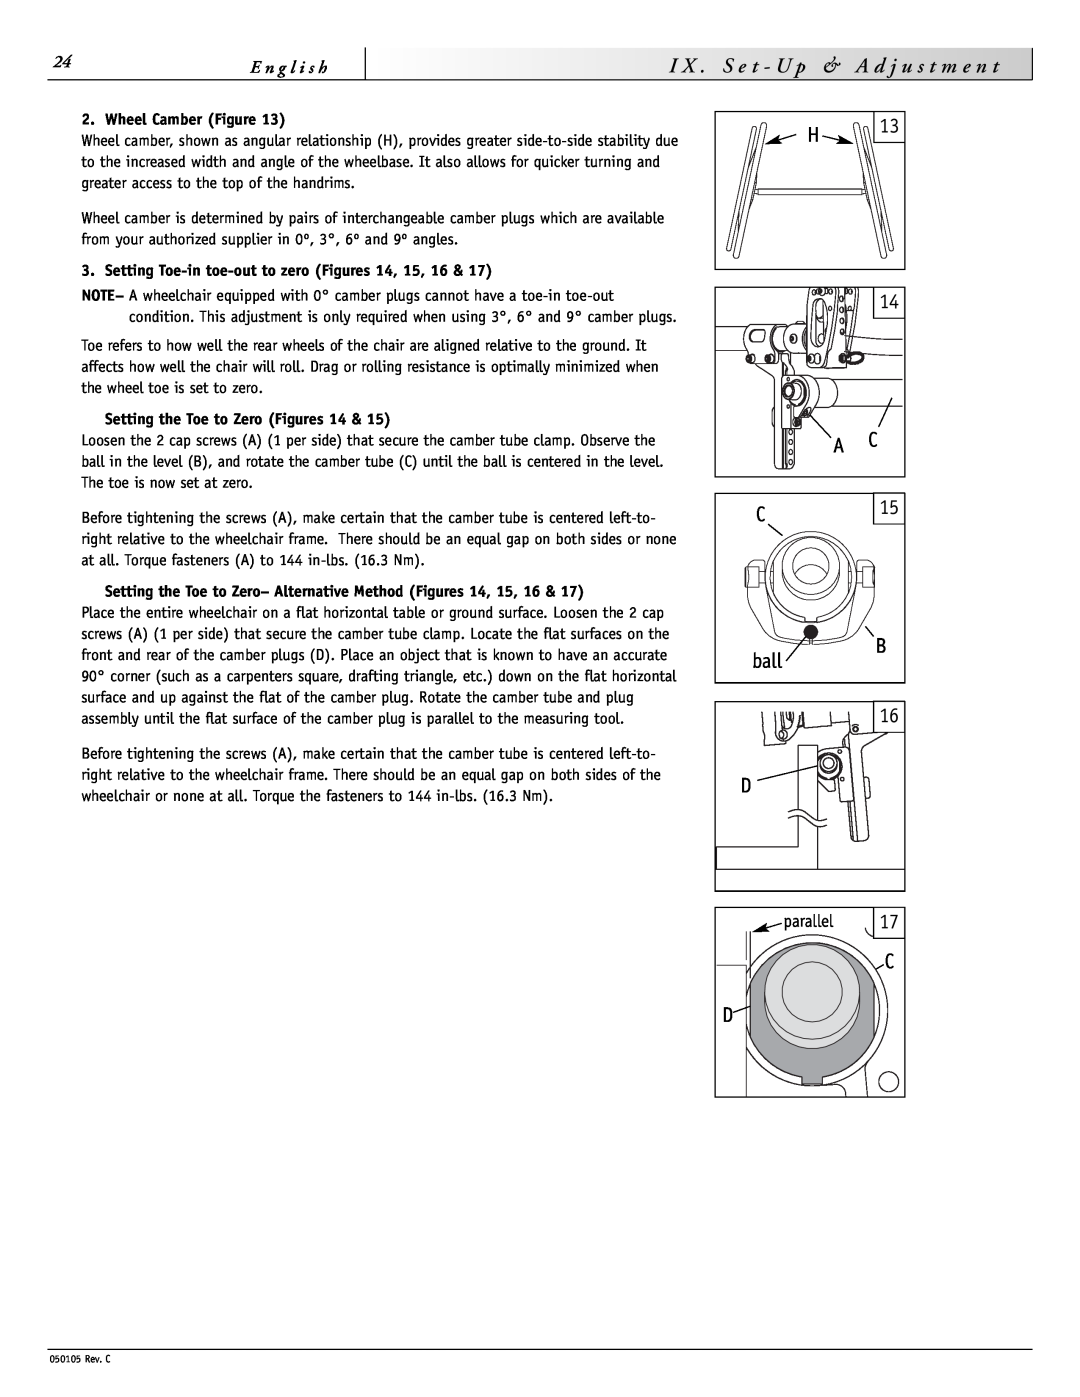 Sunrise Medical GT instruction manual ball, S e t - U p, A d j u s t m e n t, E n g l i s h, Wheel Camber Figure 